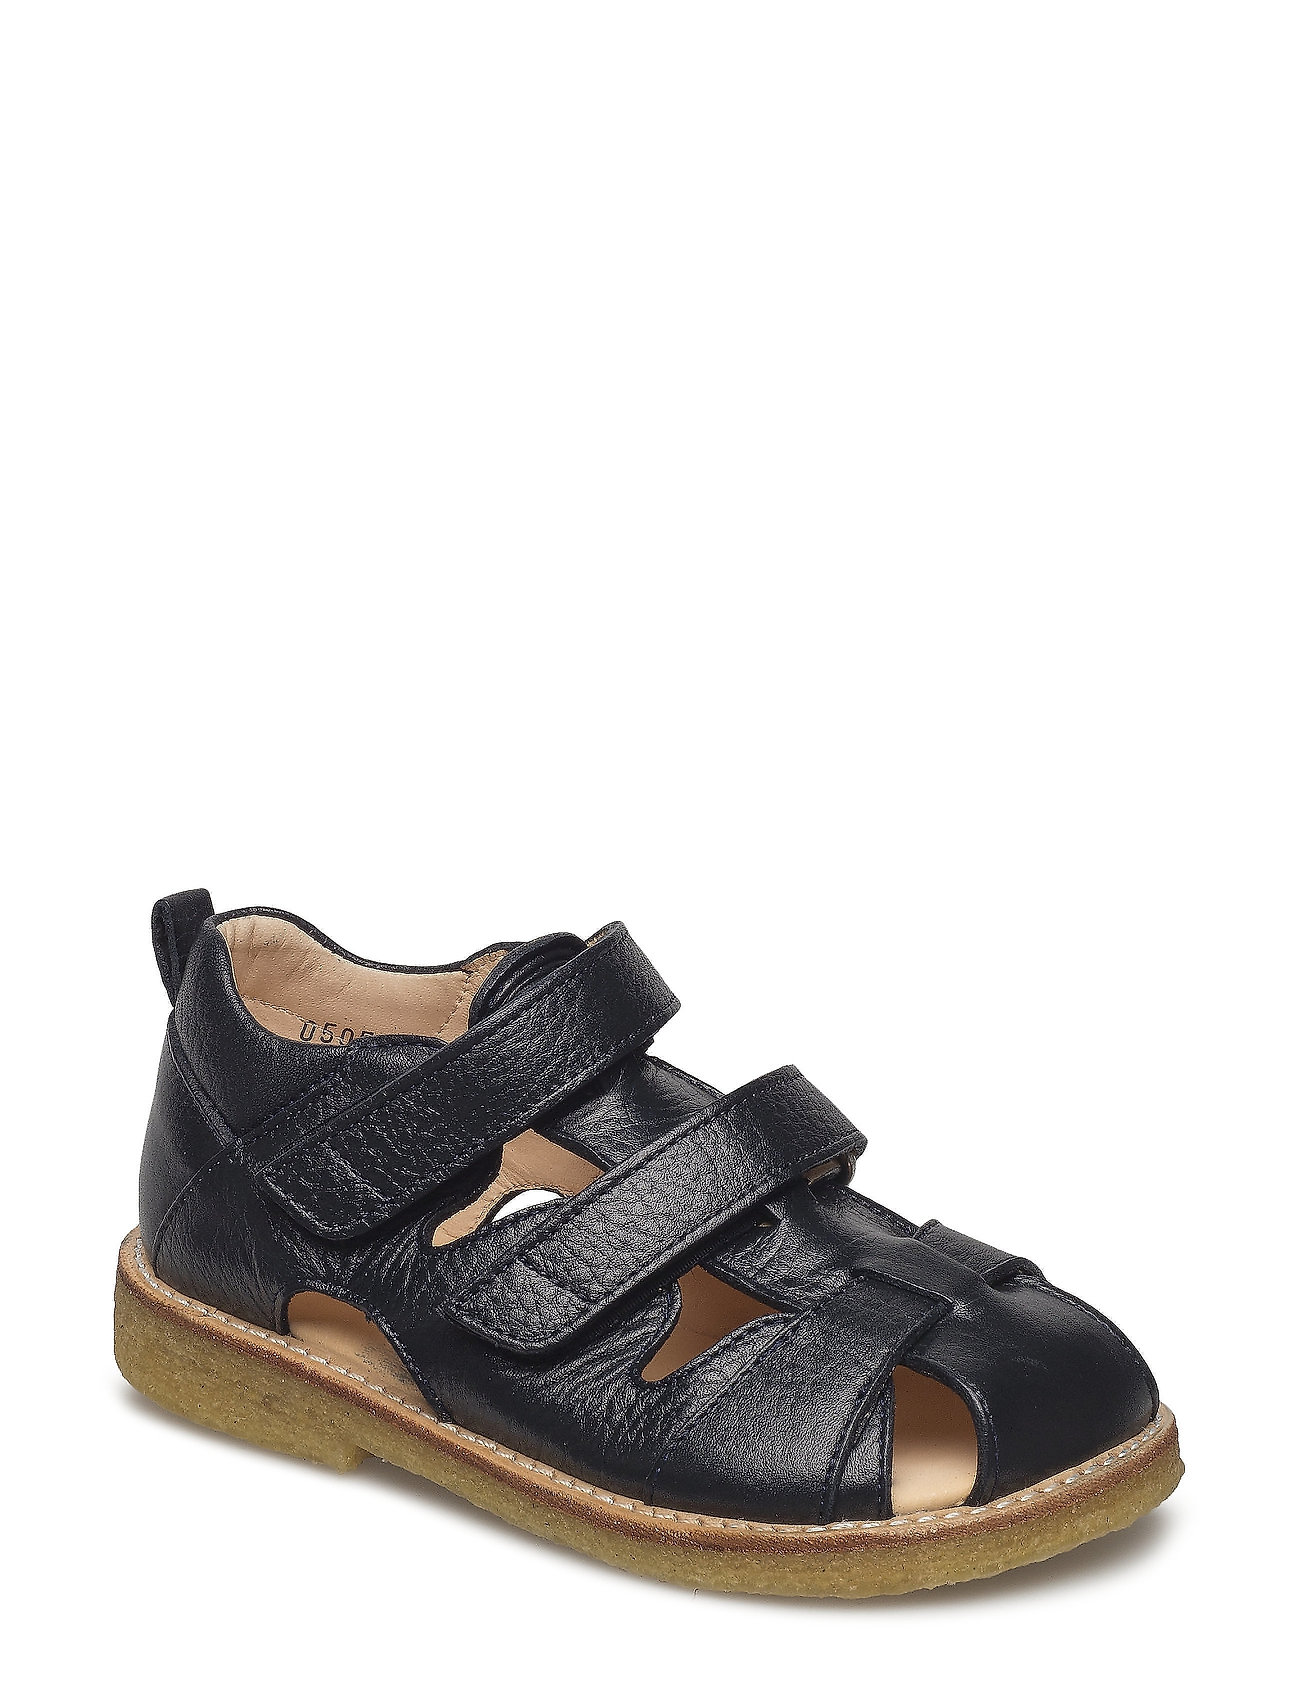 Sandals - Flat - Closed Toe - Shoes Summer Shoes Sandals Sininen ANGULUS